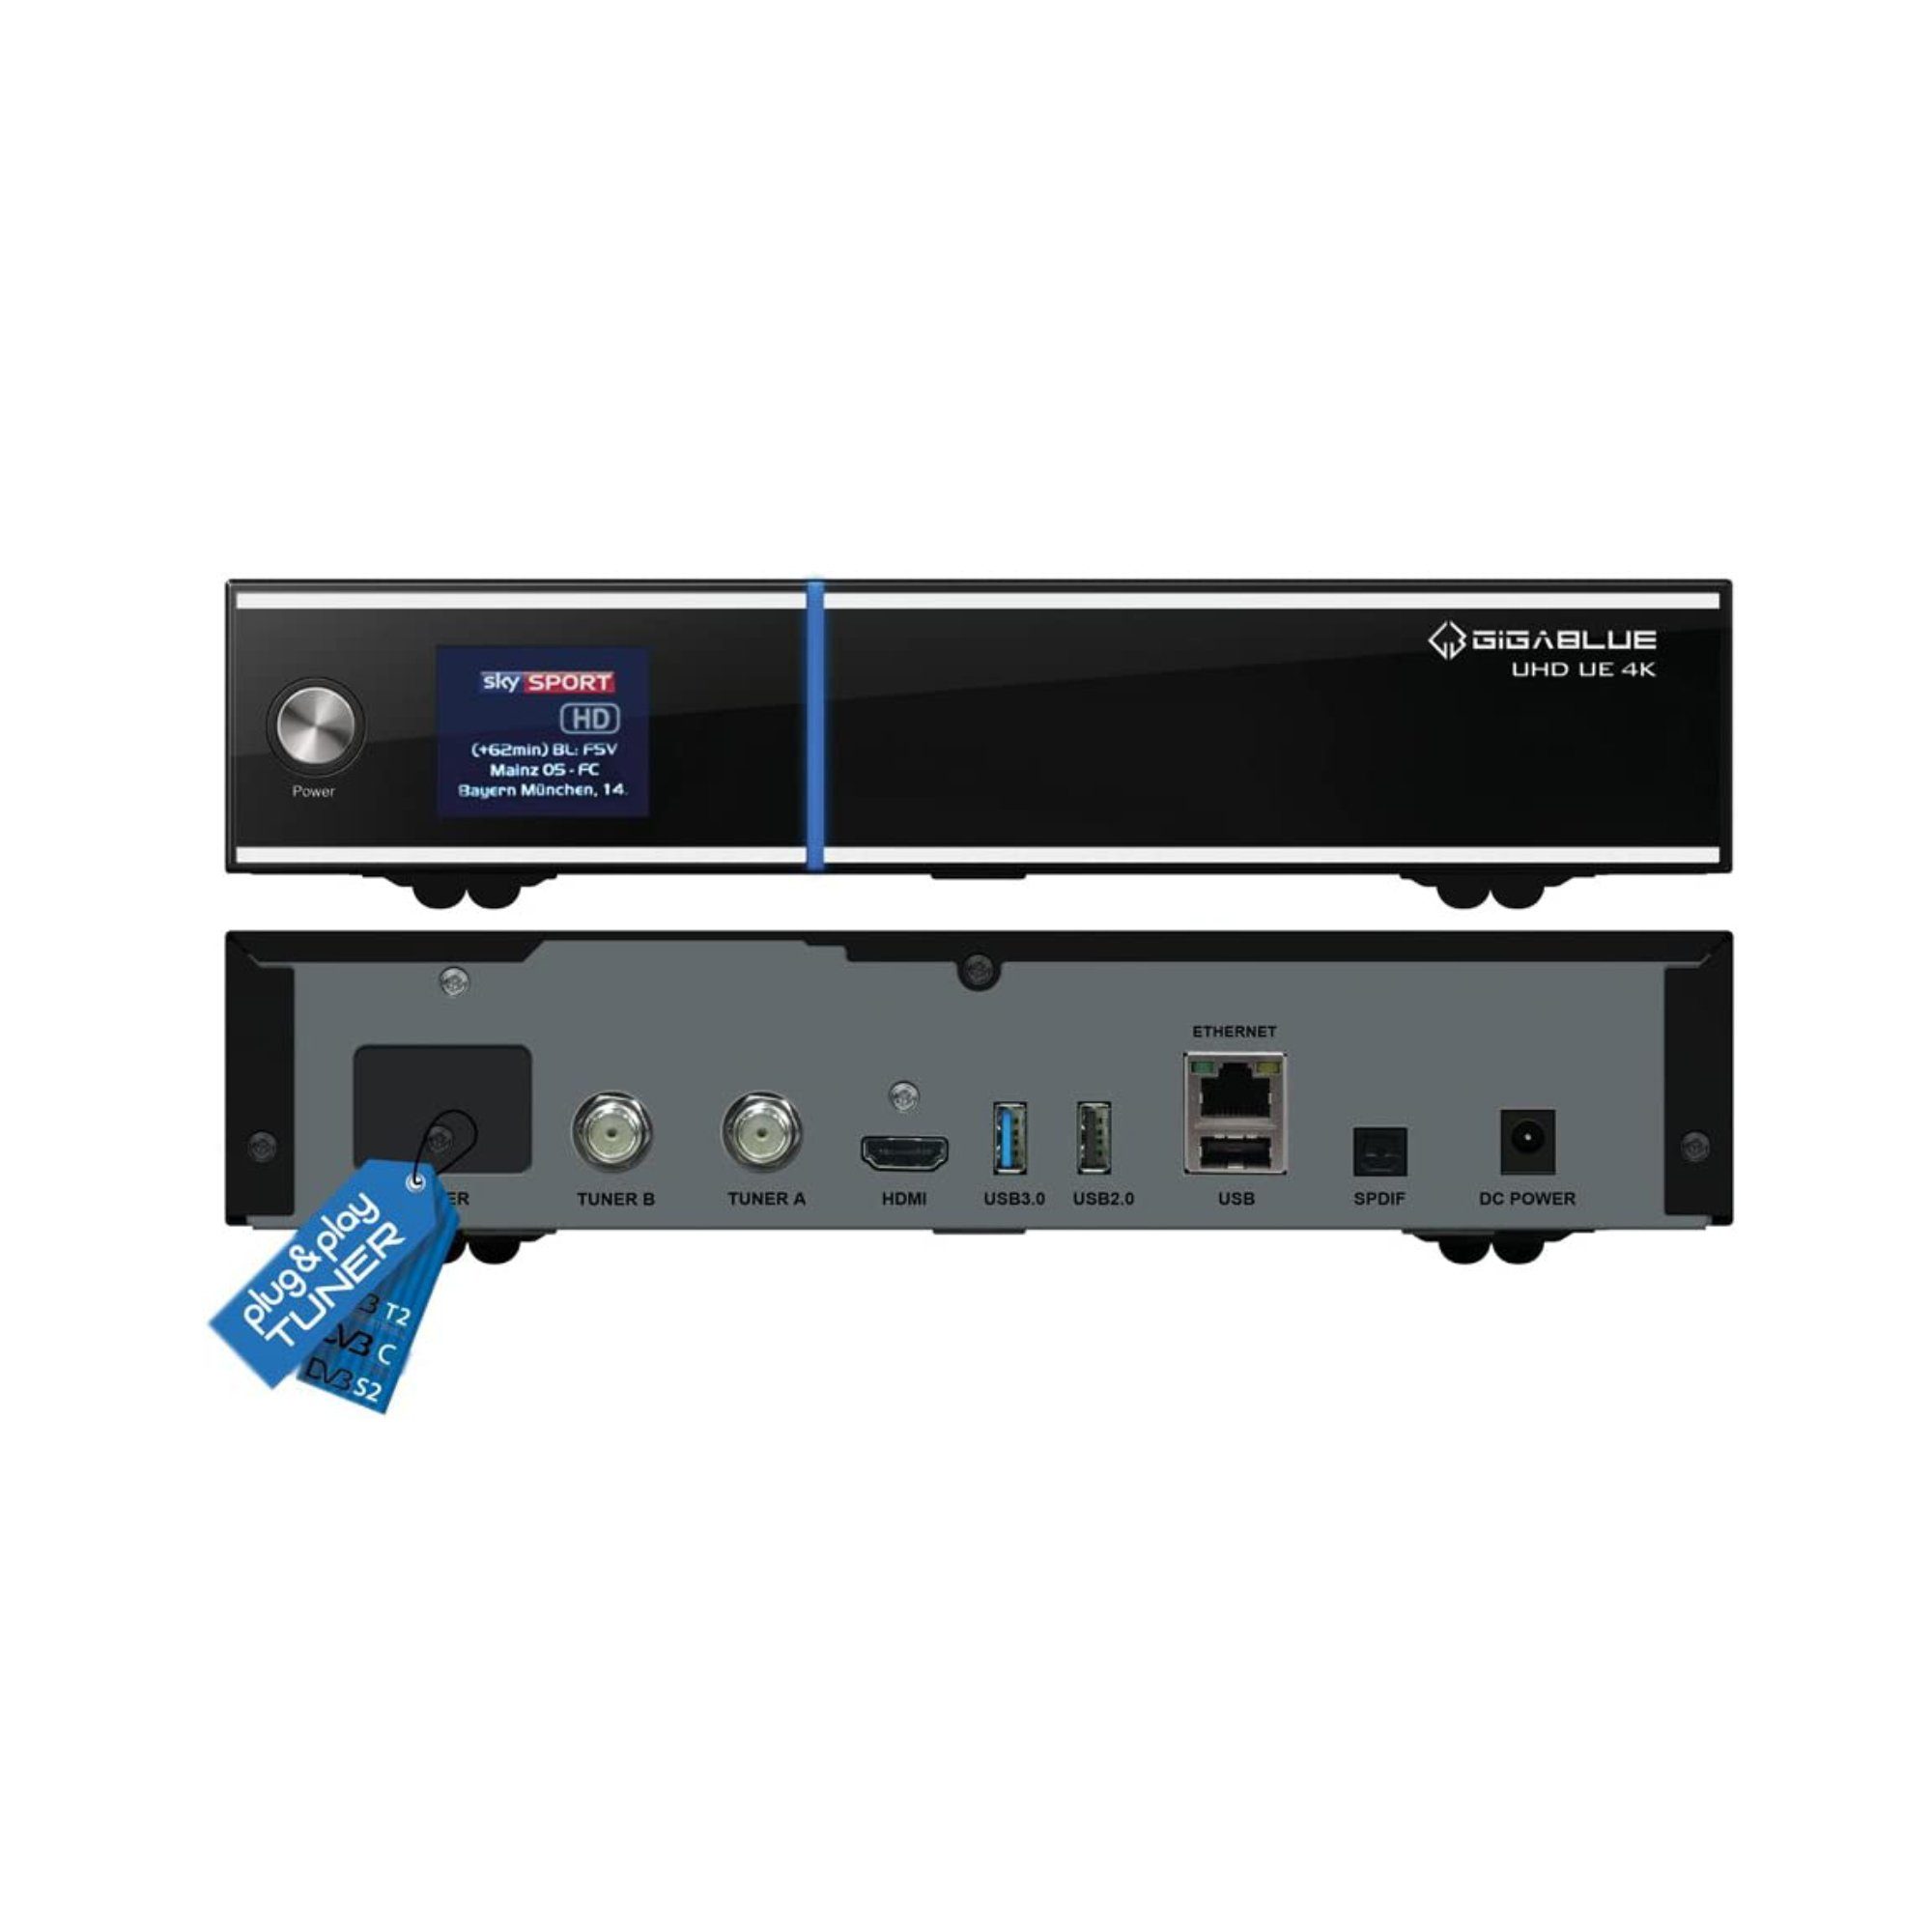 2TB SAT-Receiver Twin UHD PVR Tuner 4K CI FBC HDD 2xDVB-S2 LAN Gigablue + UE